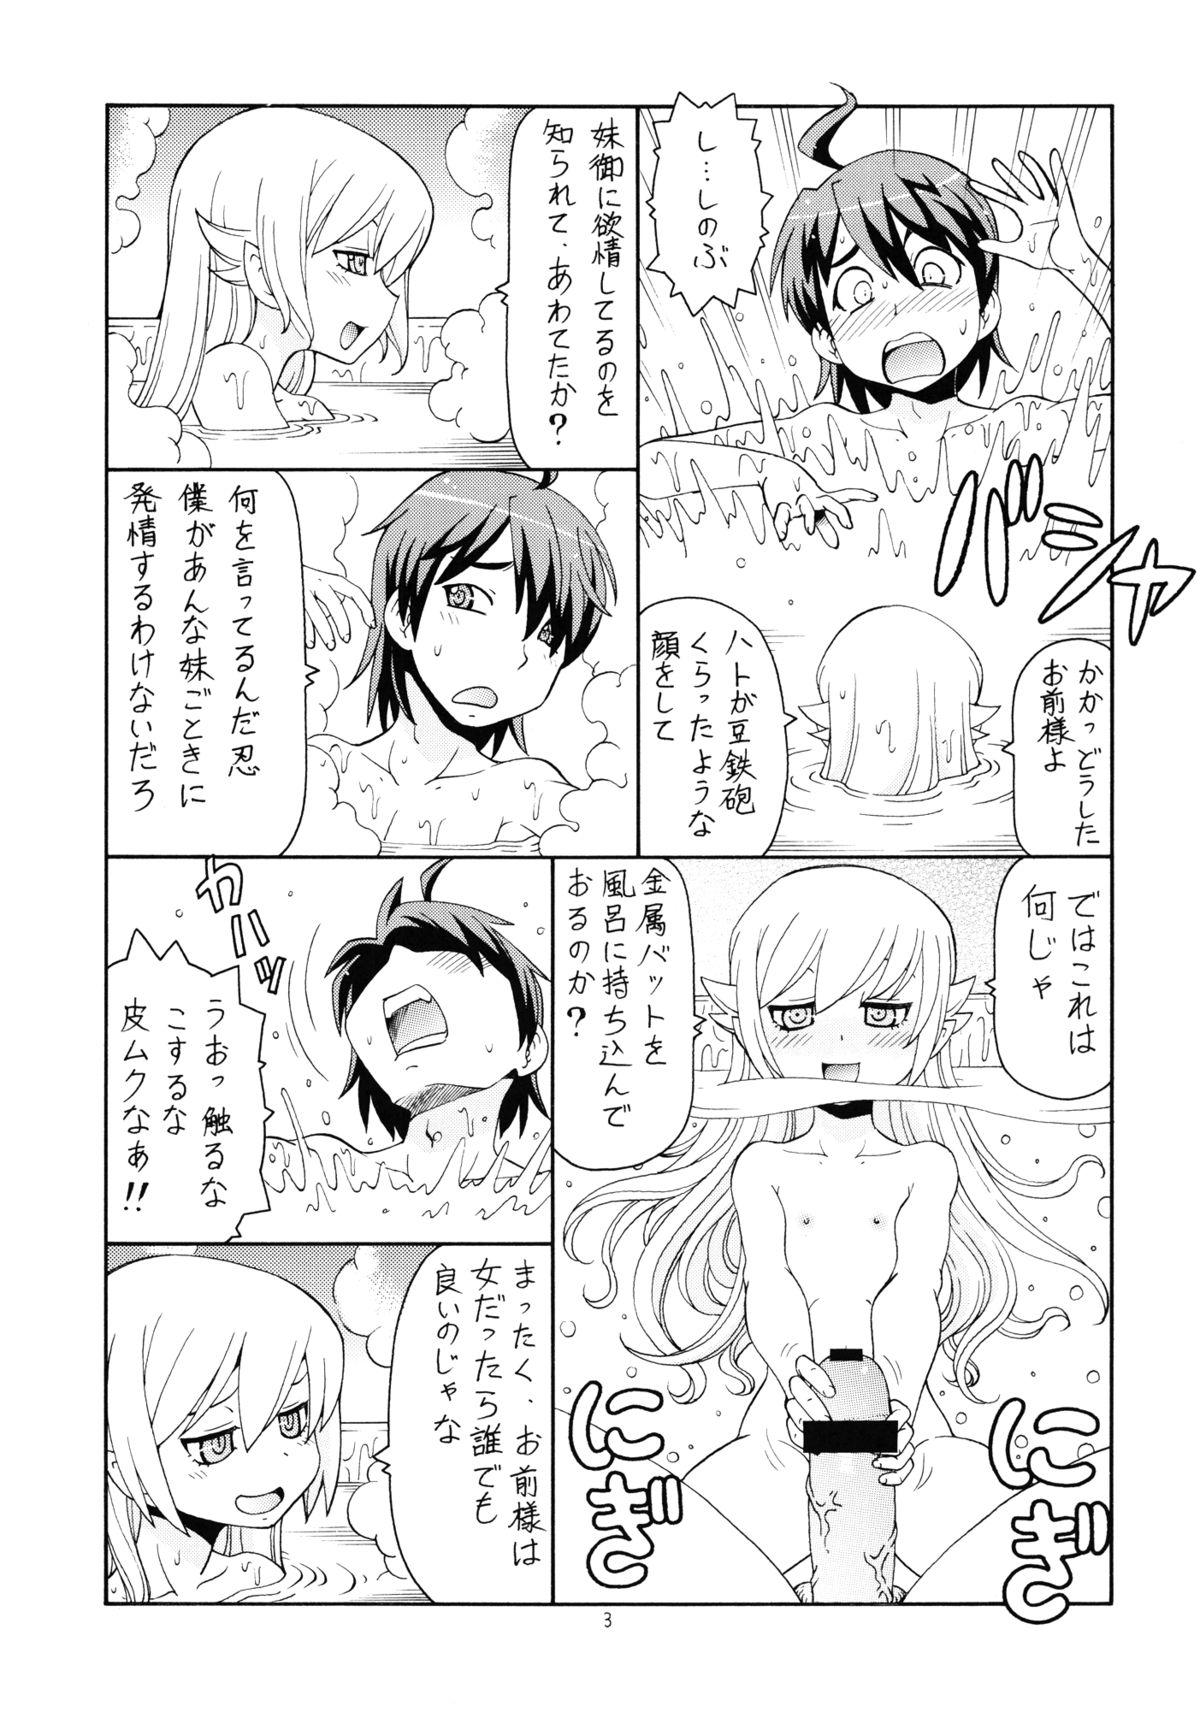 Virginity Hito ni Hakanai to Kaite "Araragi" to Yomu 5&6 - Bakemonogatari Massage - Page 4